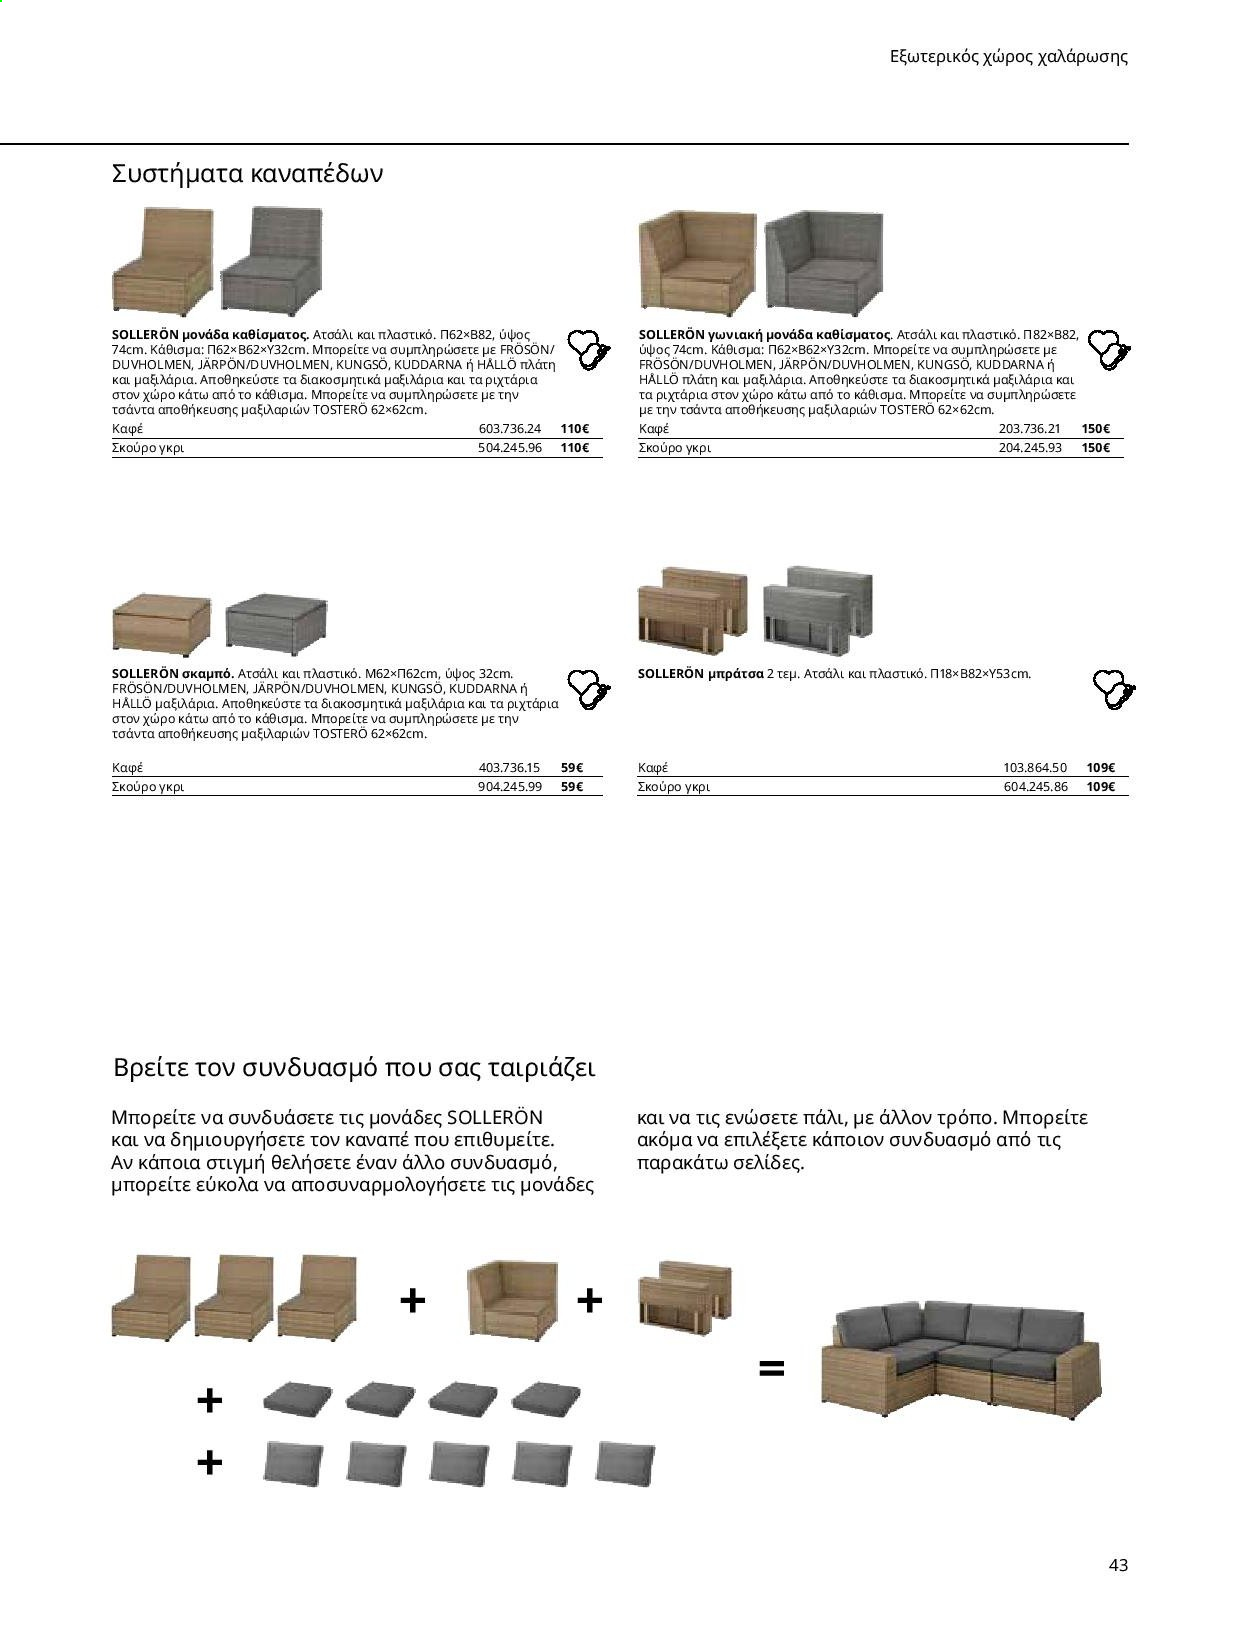 thumbnail - Φυλλάδια IKEA - Εκπτωτικά προϊόντα - σκαμπο, καναπέ, αποθήκευσης. Σελίδα 42.